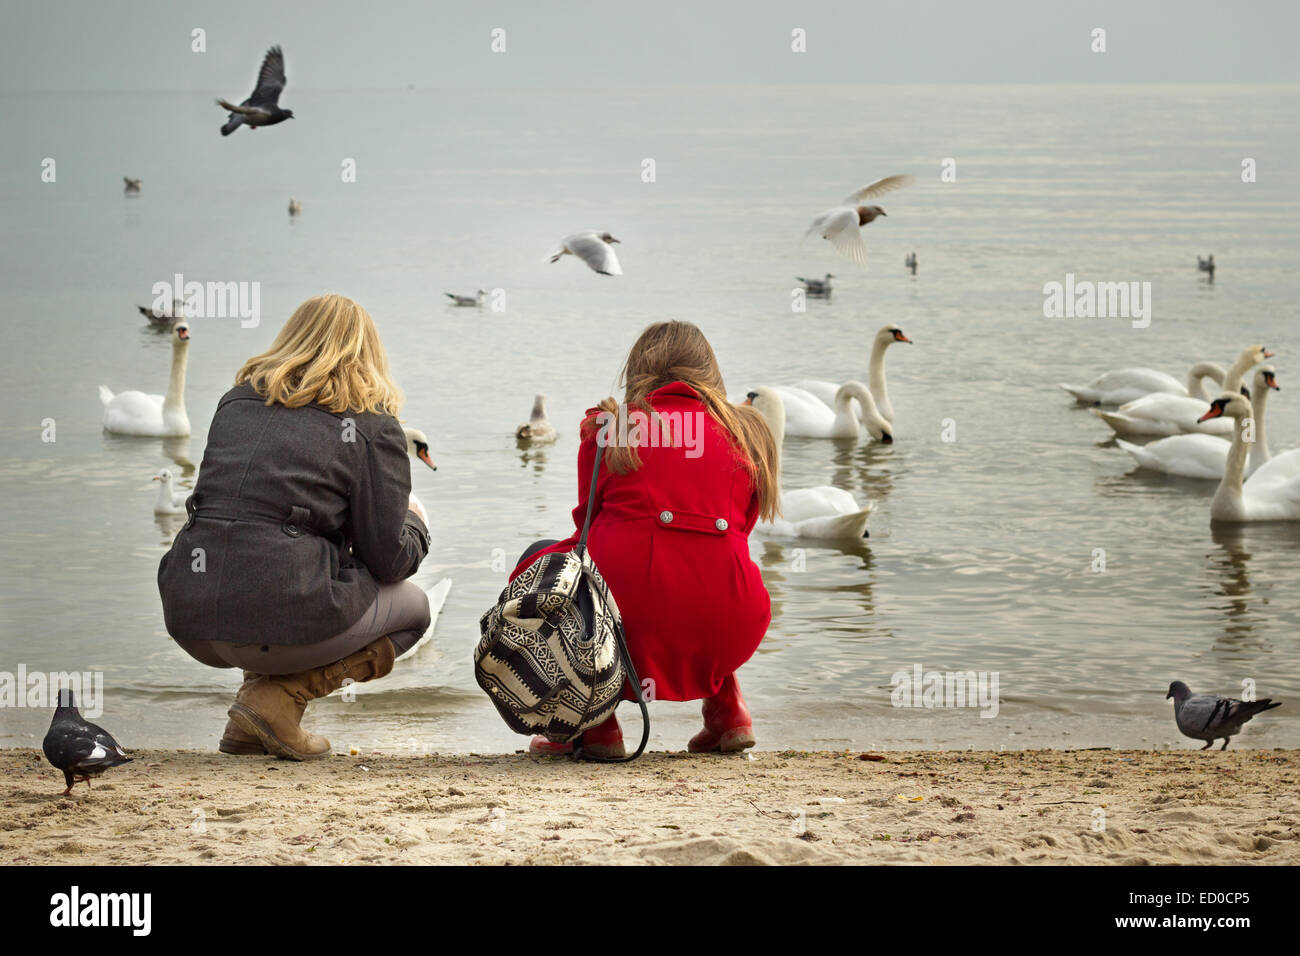 Bulgarien, Varna, zwei Mädchen (12-13, 16-17) am Strand mit Blick auf Vögel Stockfoto